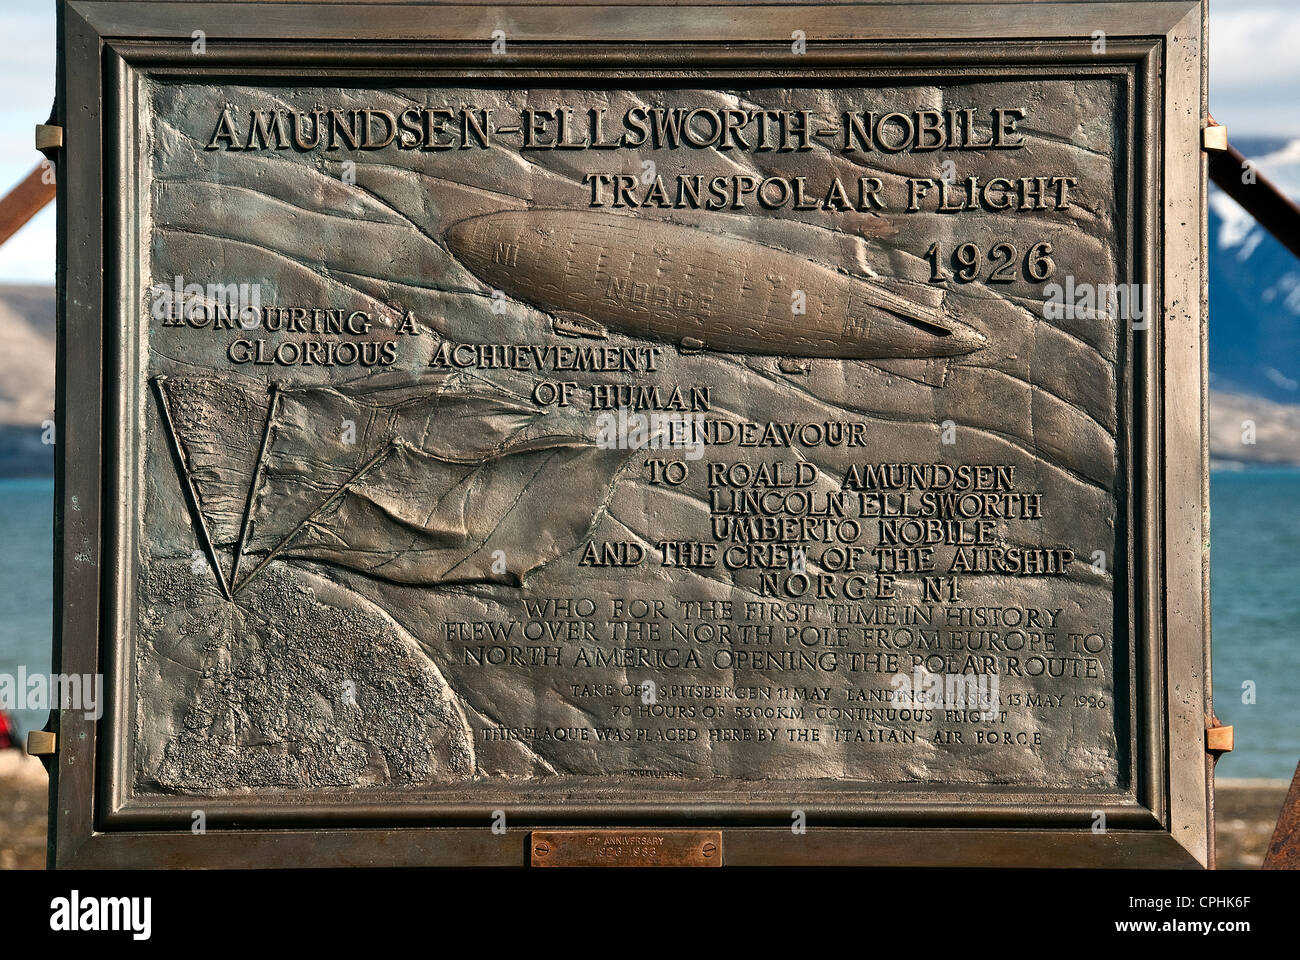 Amundsen-Ellsworth- Nobile Transpolar Flight 1926 Ny Ålesund Spitsbergen in Norvegia Foto Stock